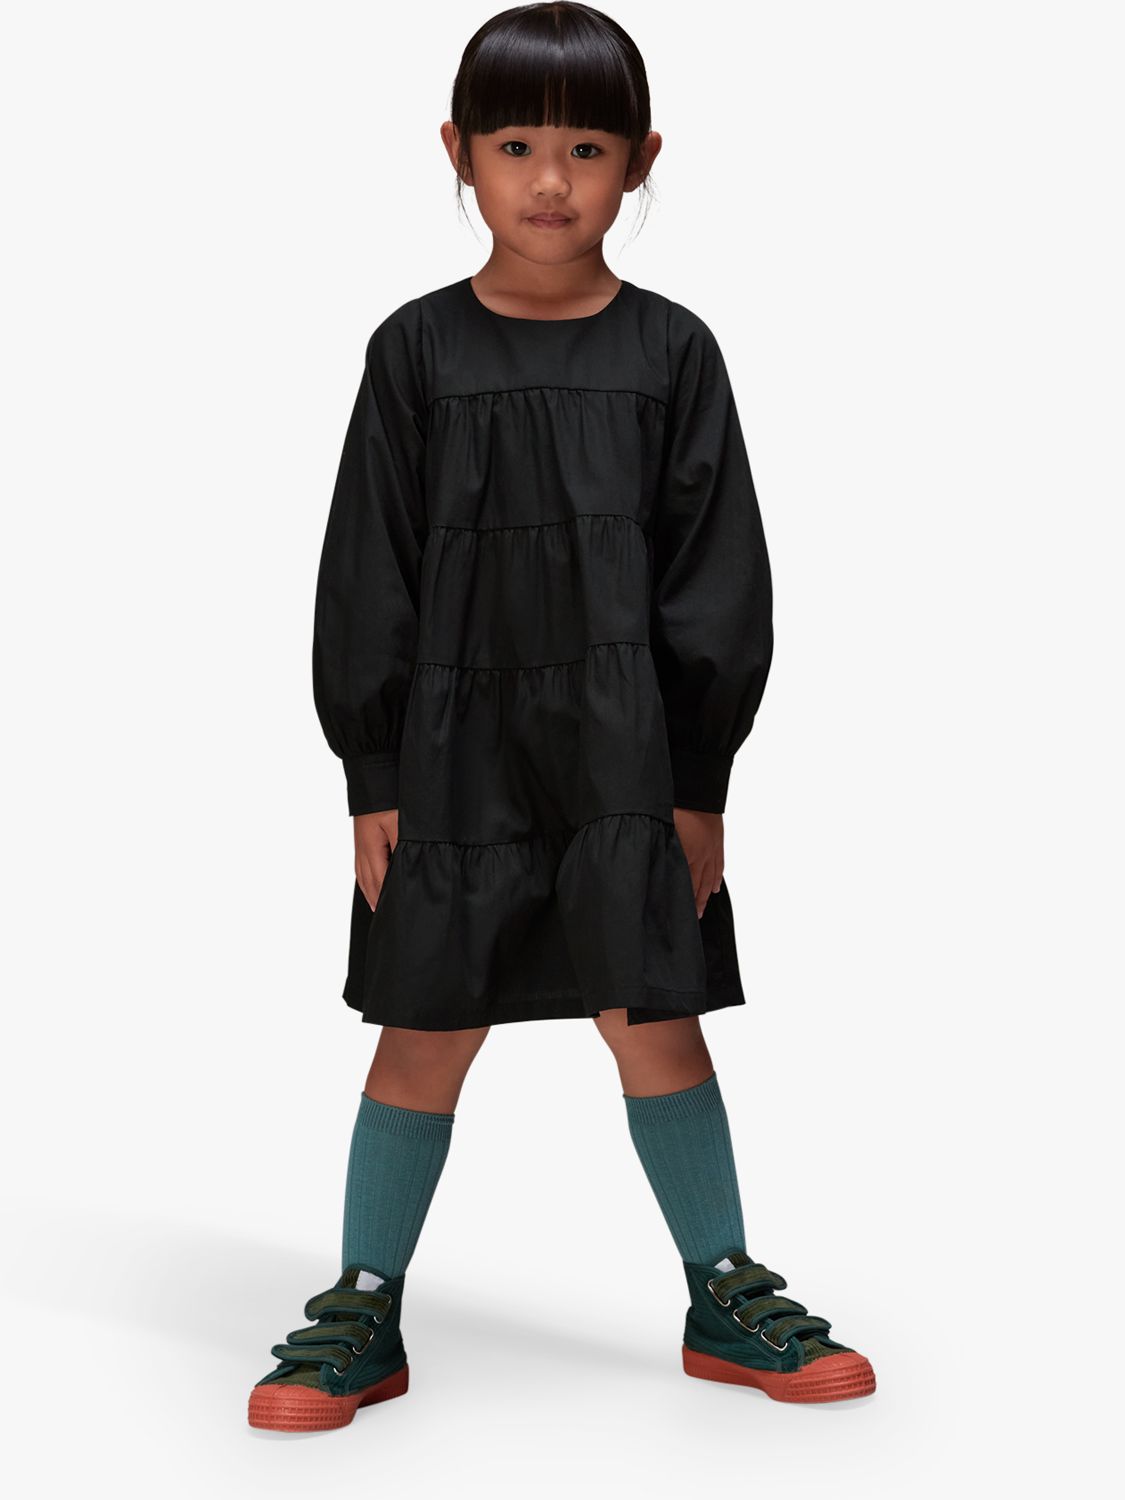 Buy Whistles Kids' Sawyer Tiered Dress, Black Online at johnlewis.com